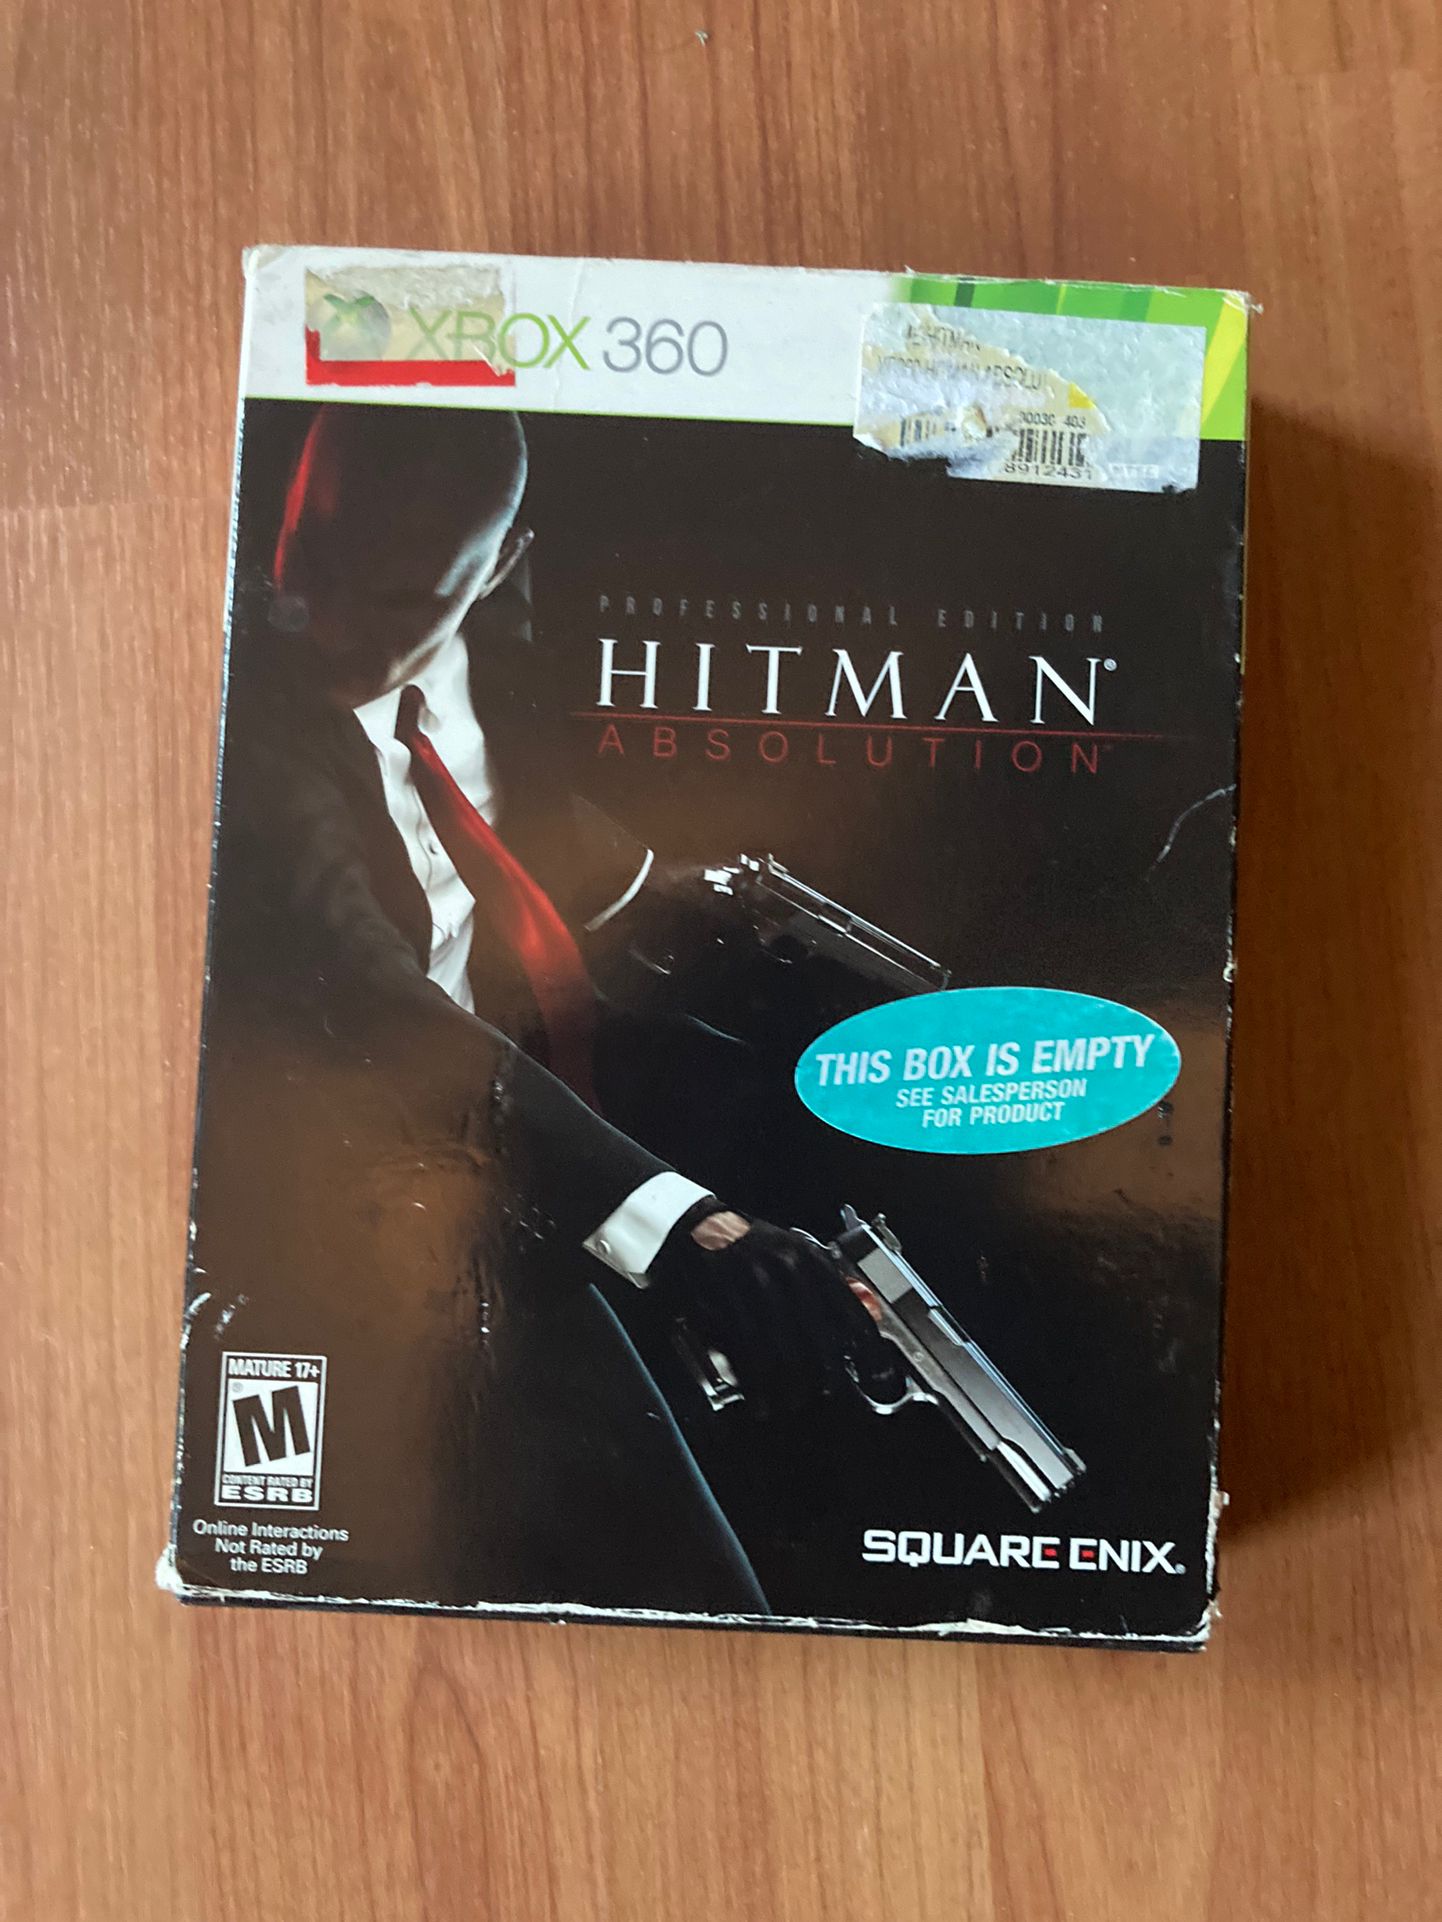 Hitman: Absolution -- Professional Edition (Microsoft Xbox 360, 2012)